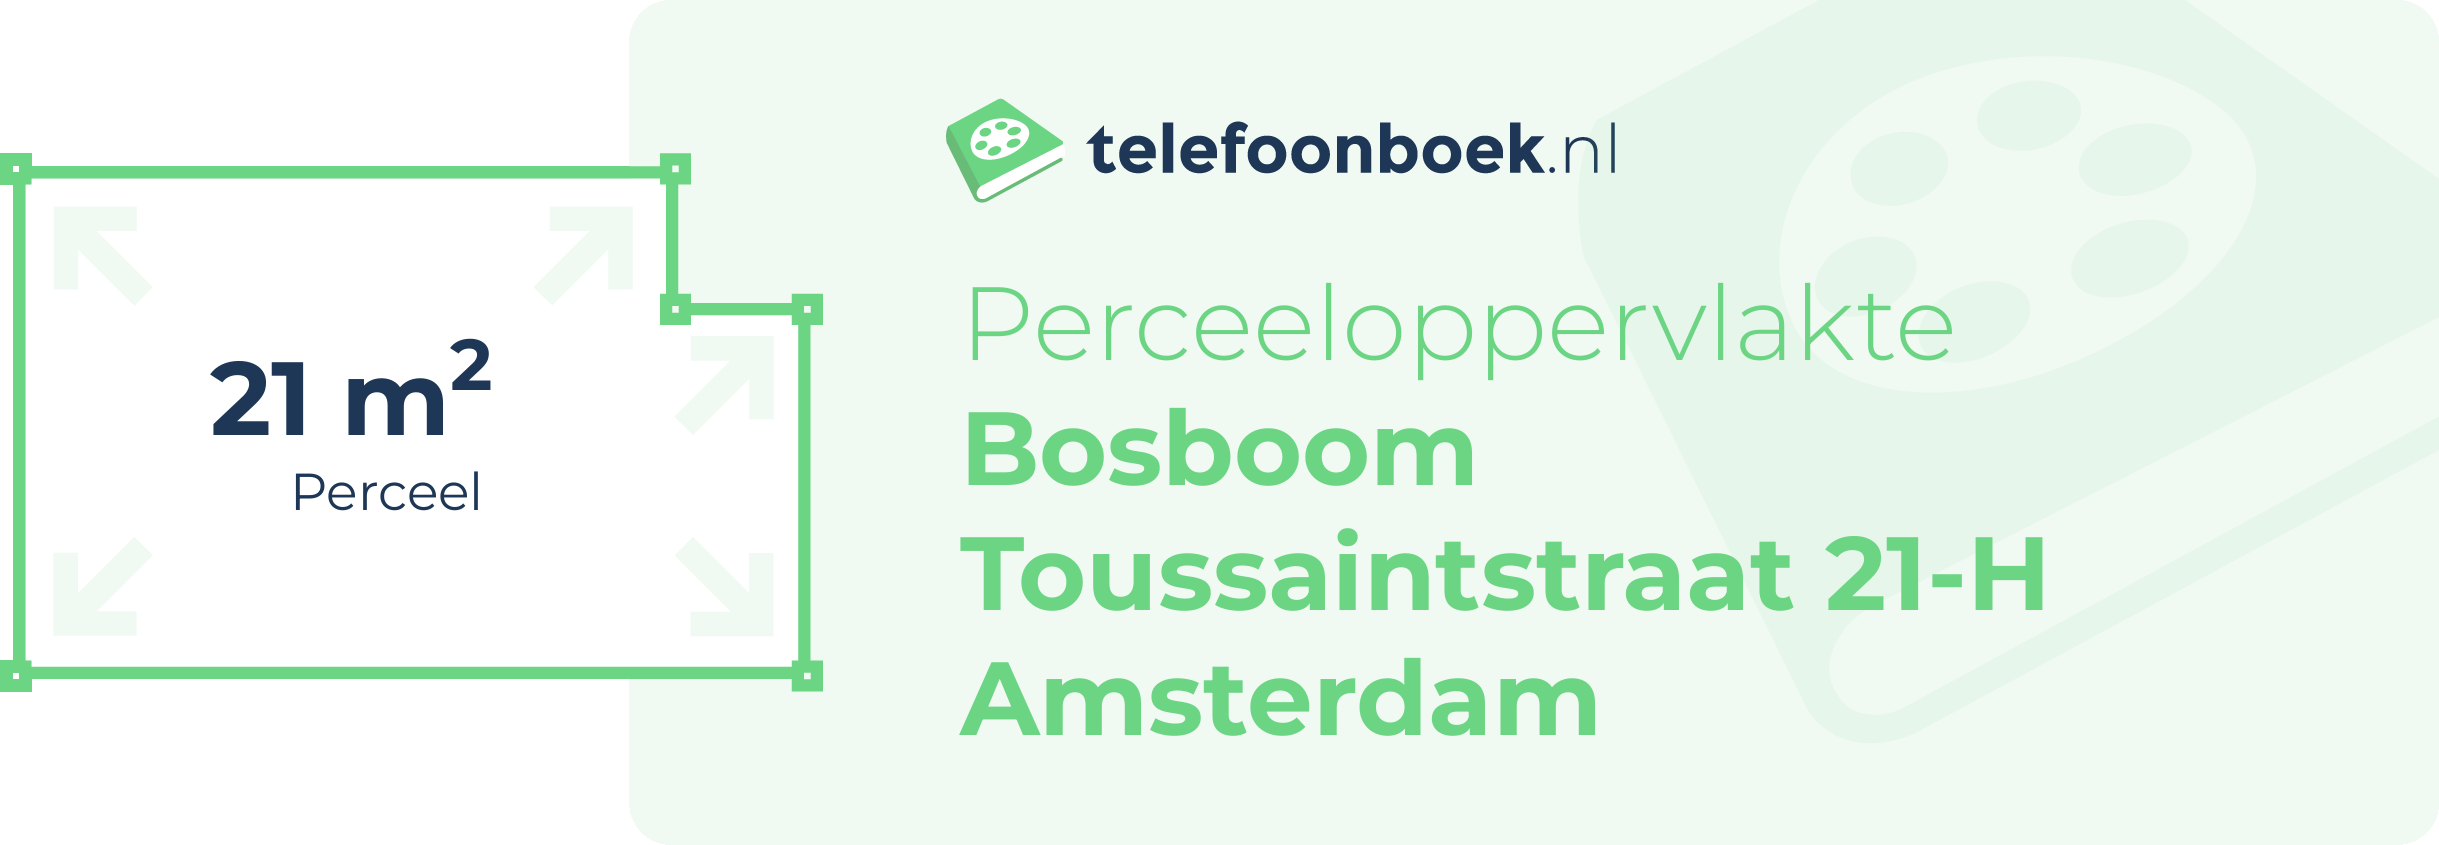 Perceeloppervlakte Bosboom Toussaintstraat 21-H Amsterdam